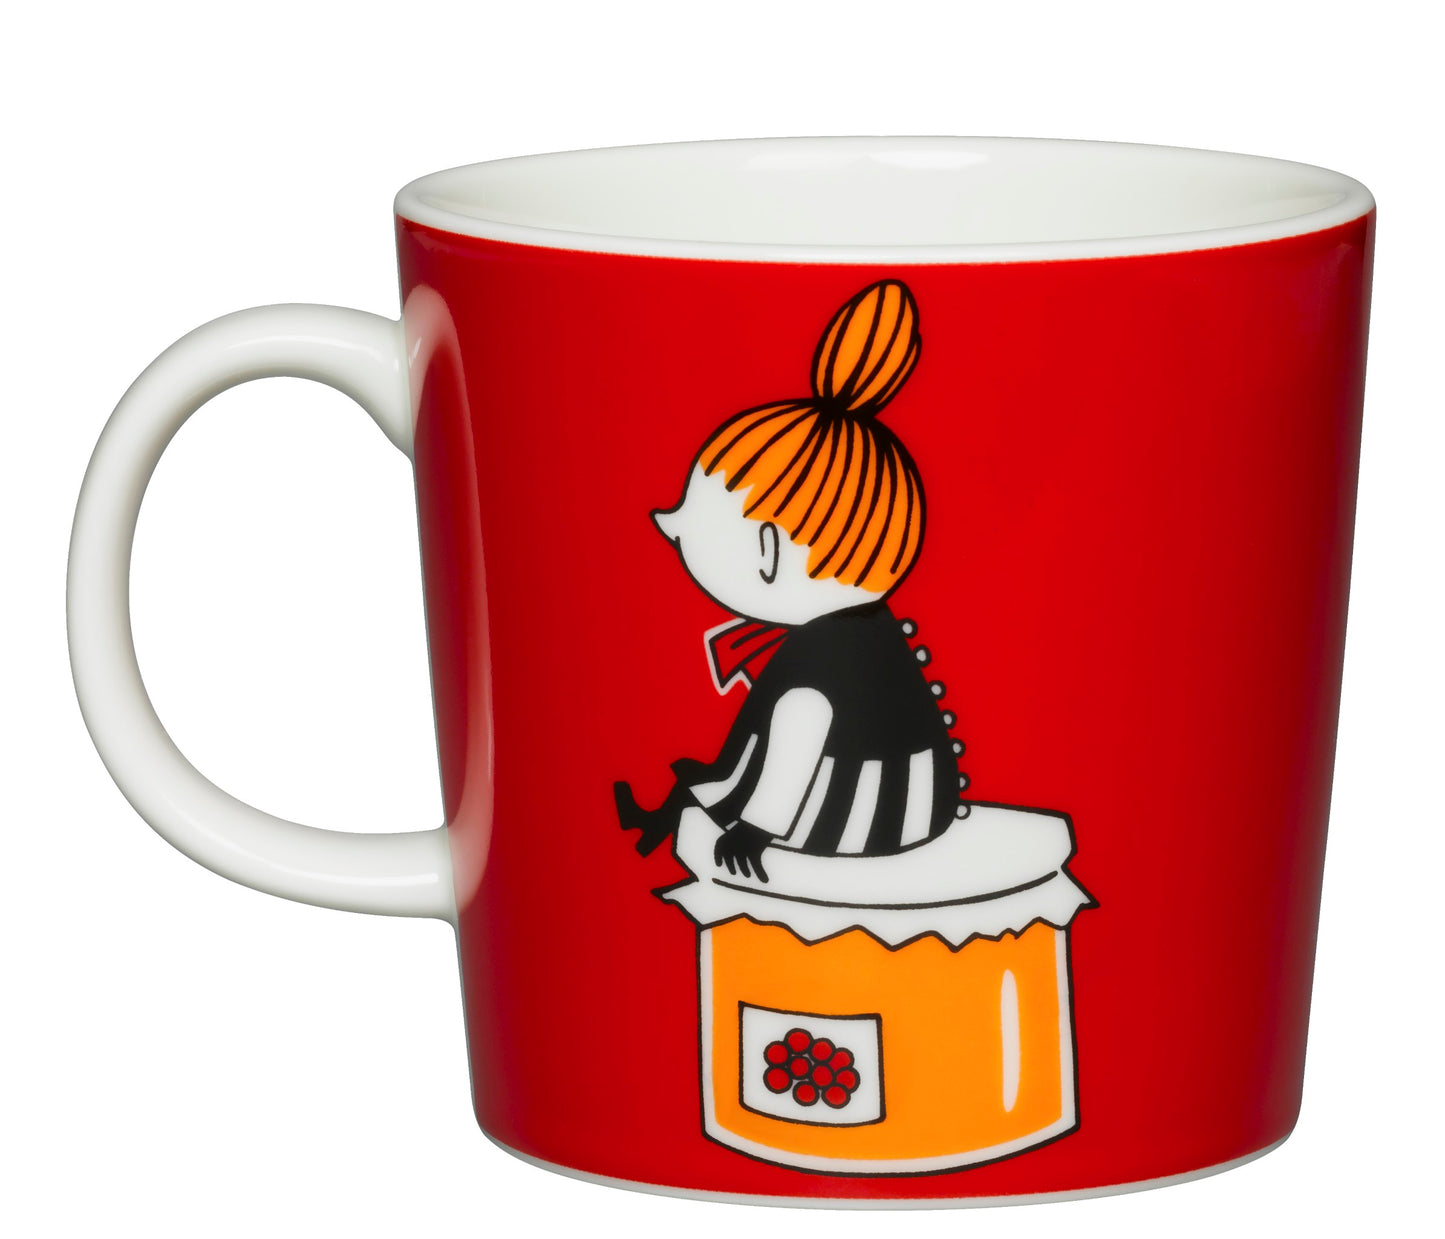 Moomin Mug - Little My Red